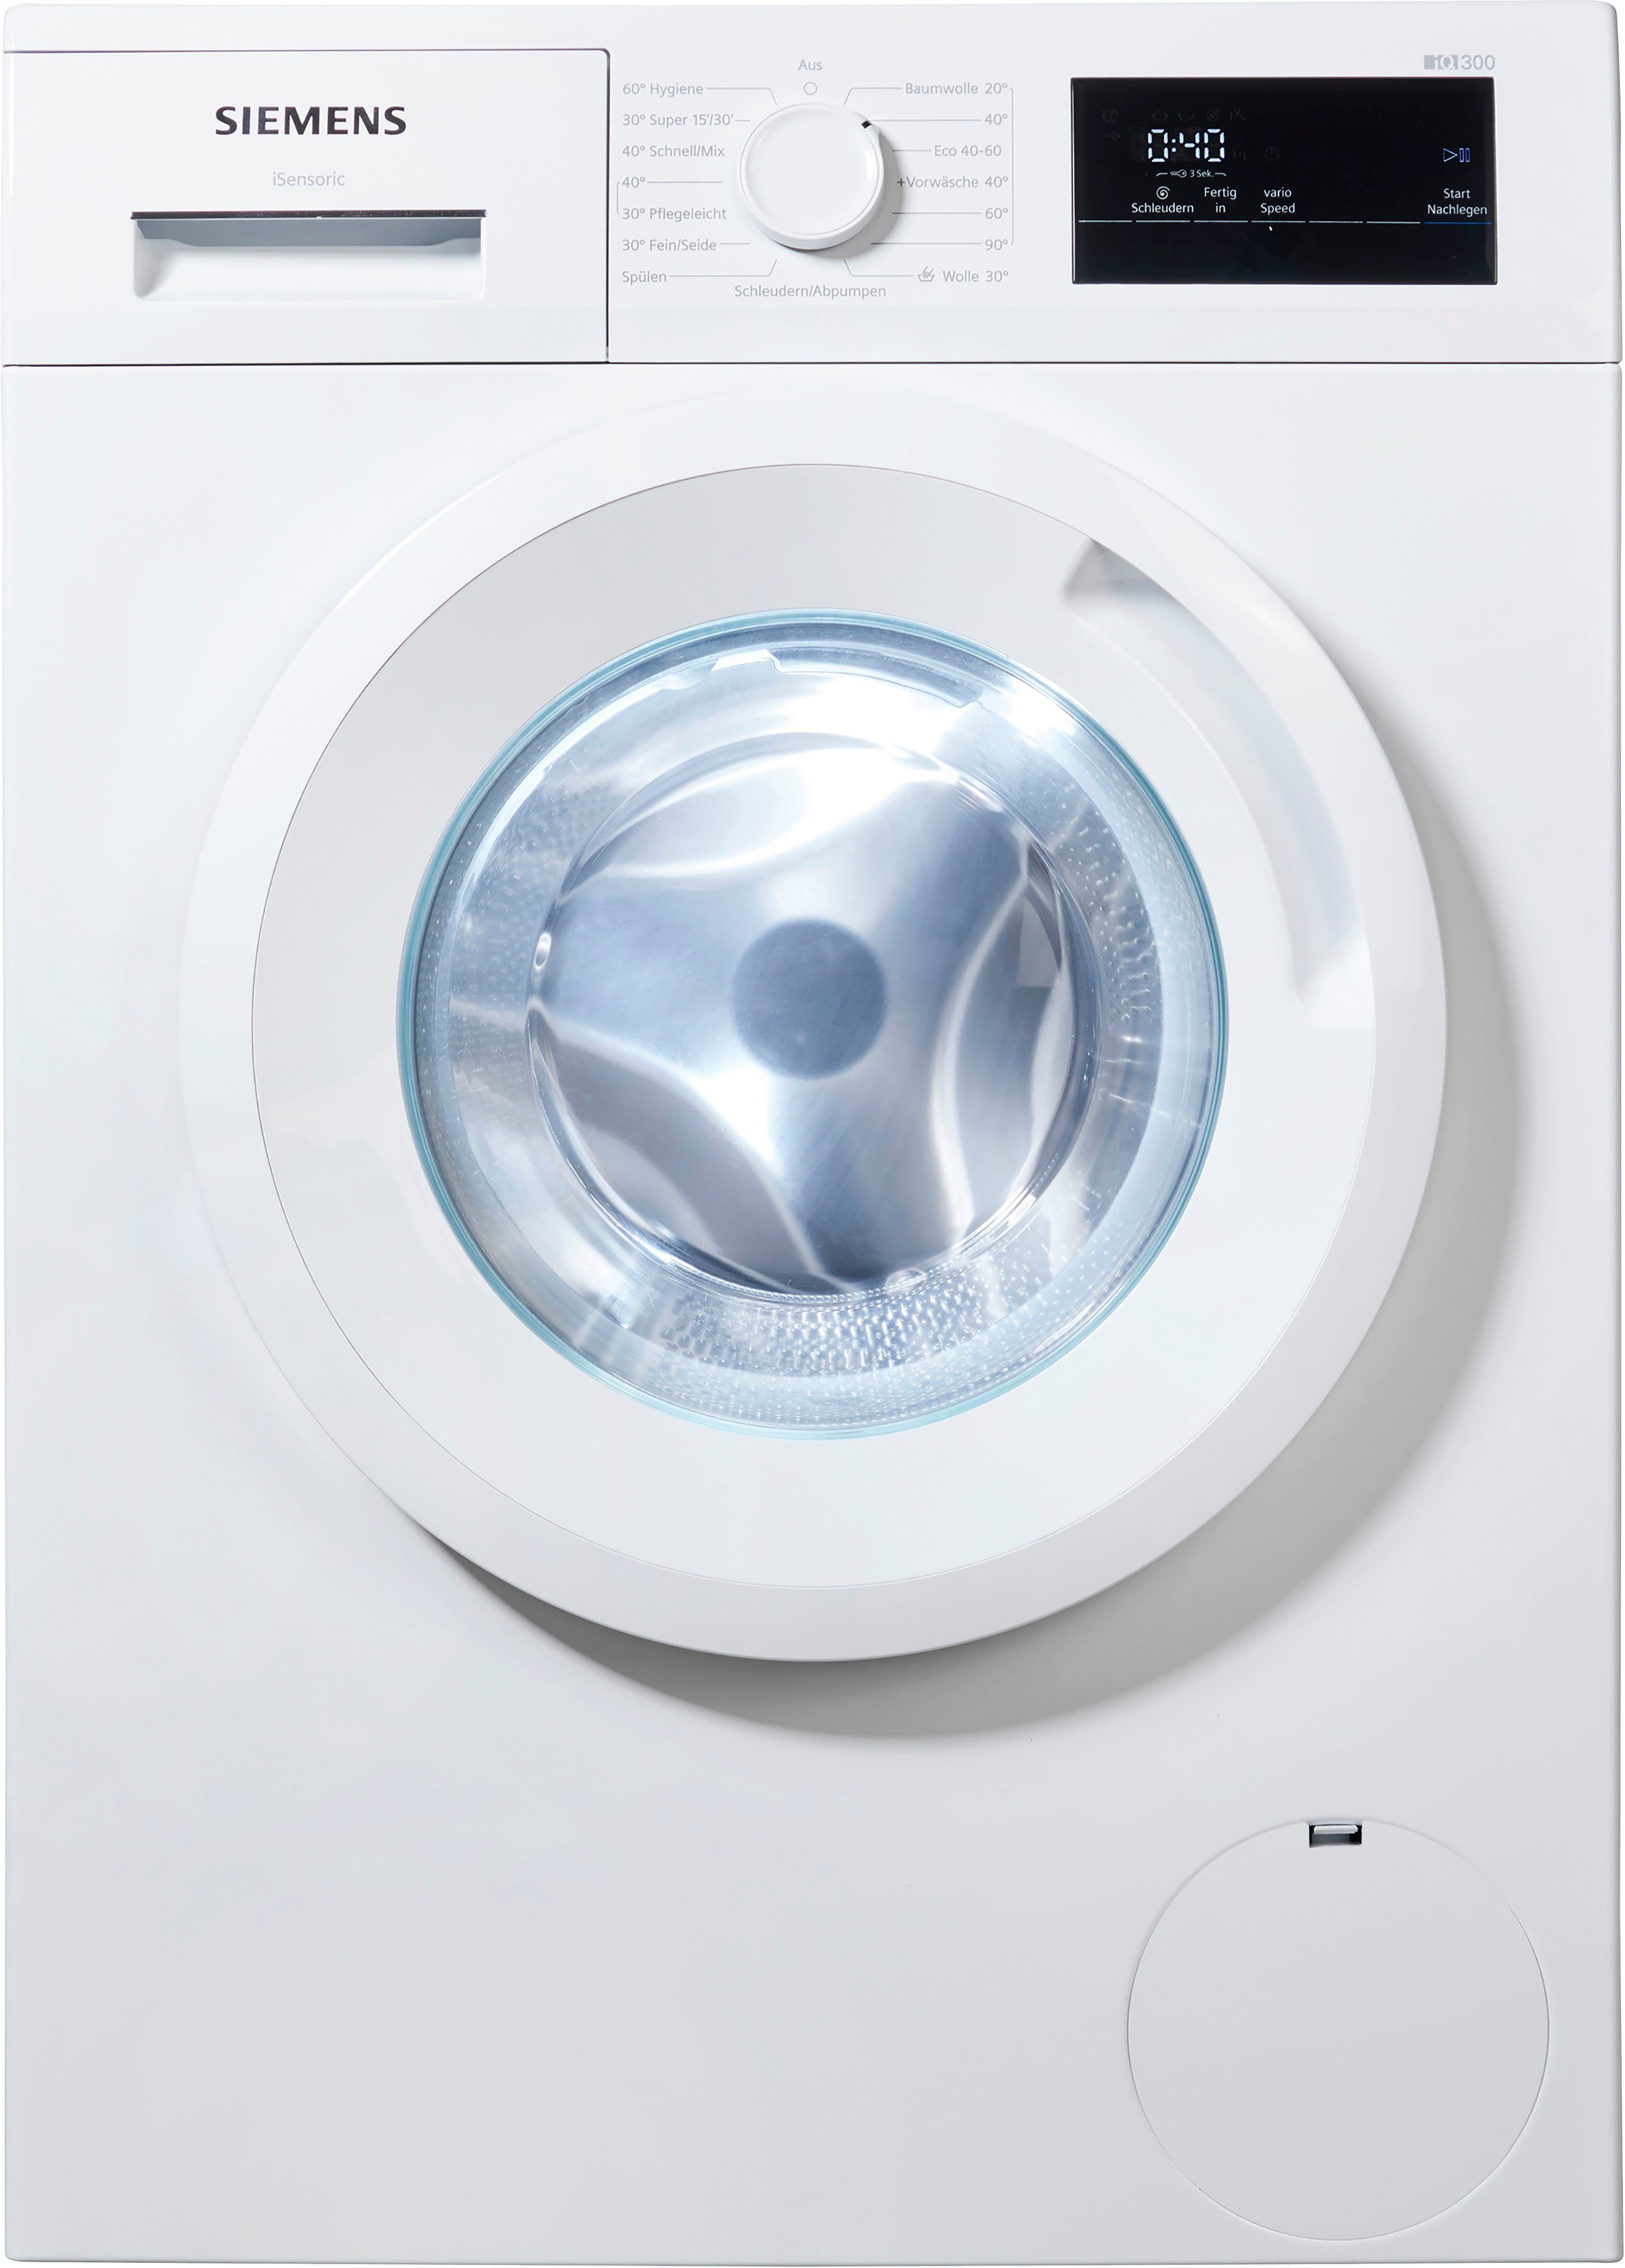 SIEMENS Waschmaschine 7 1400 WM14N0A3, kg, U/min iQ300